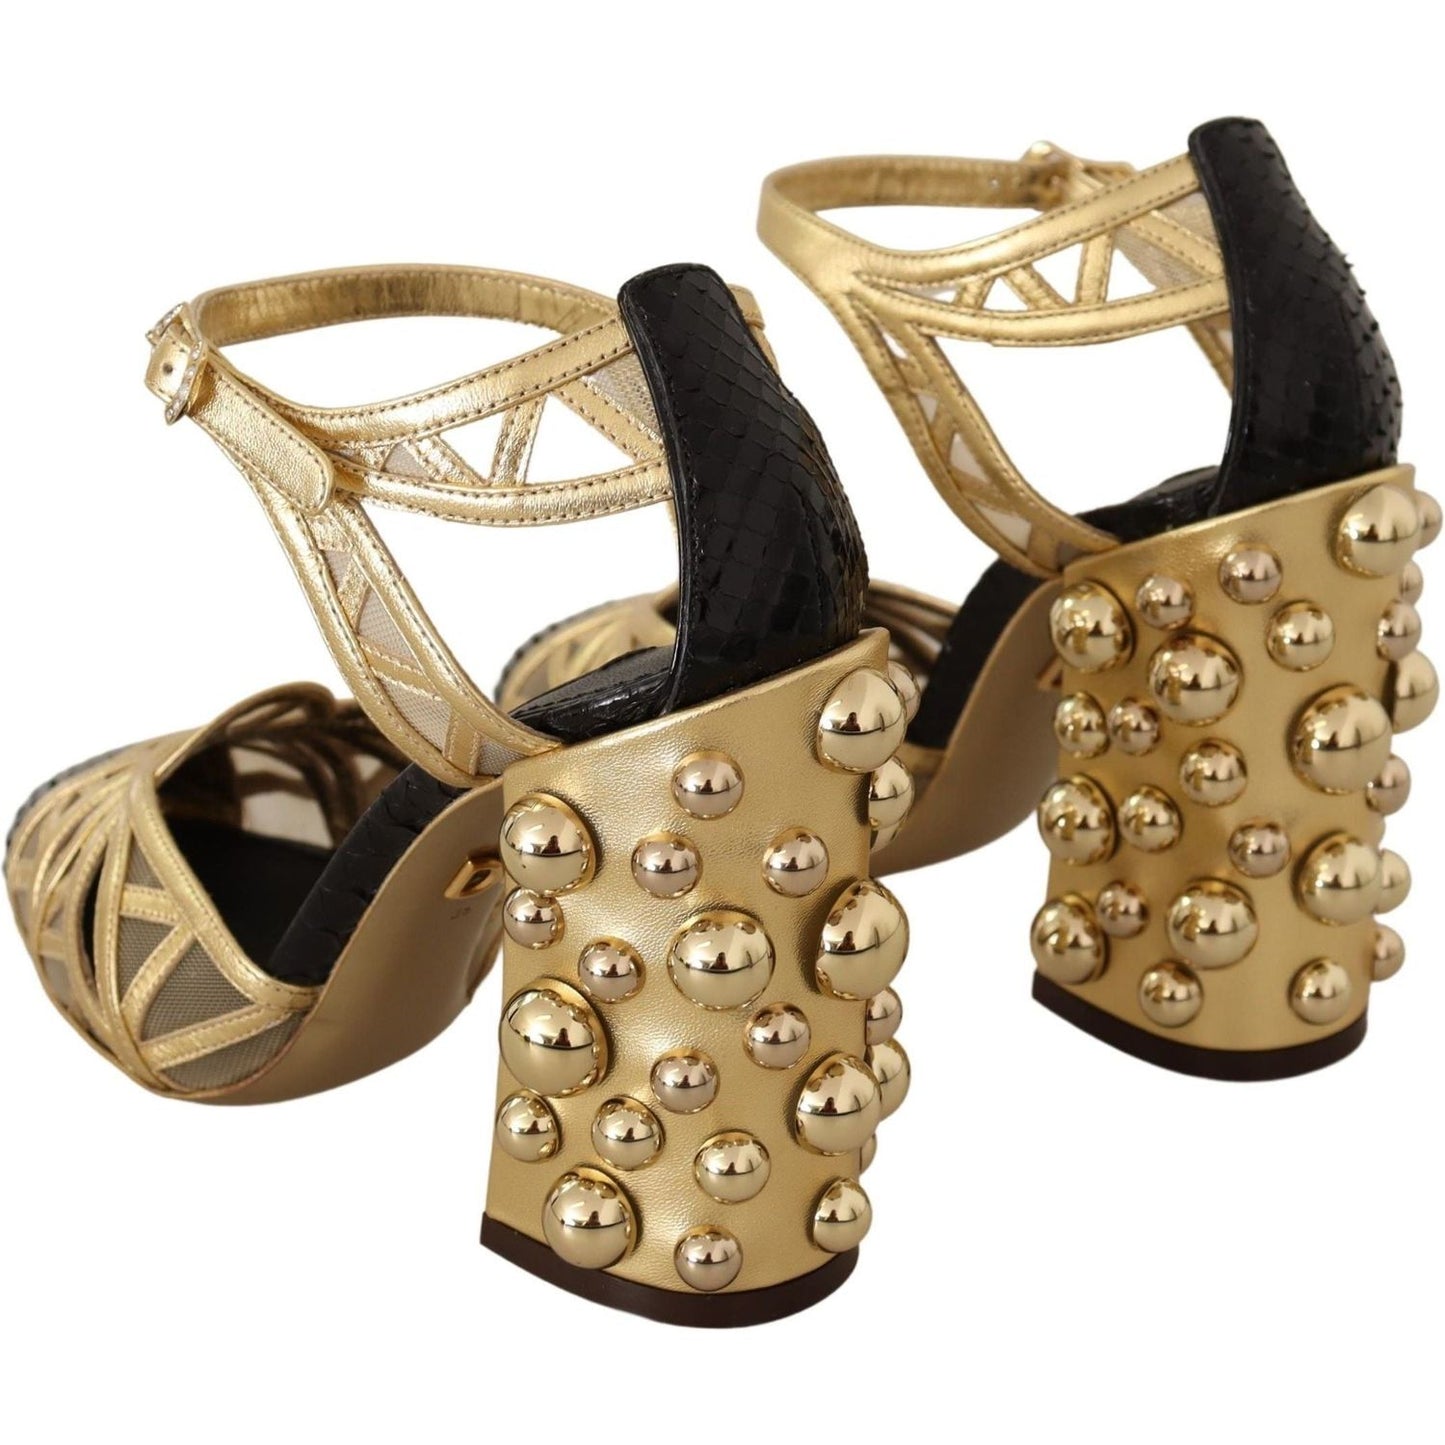 Dolce & Gabbana Elegant Crystal Studded Leather Pumps black-gold-leather-studded-ankle-straps-shoes